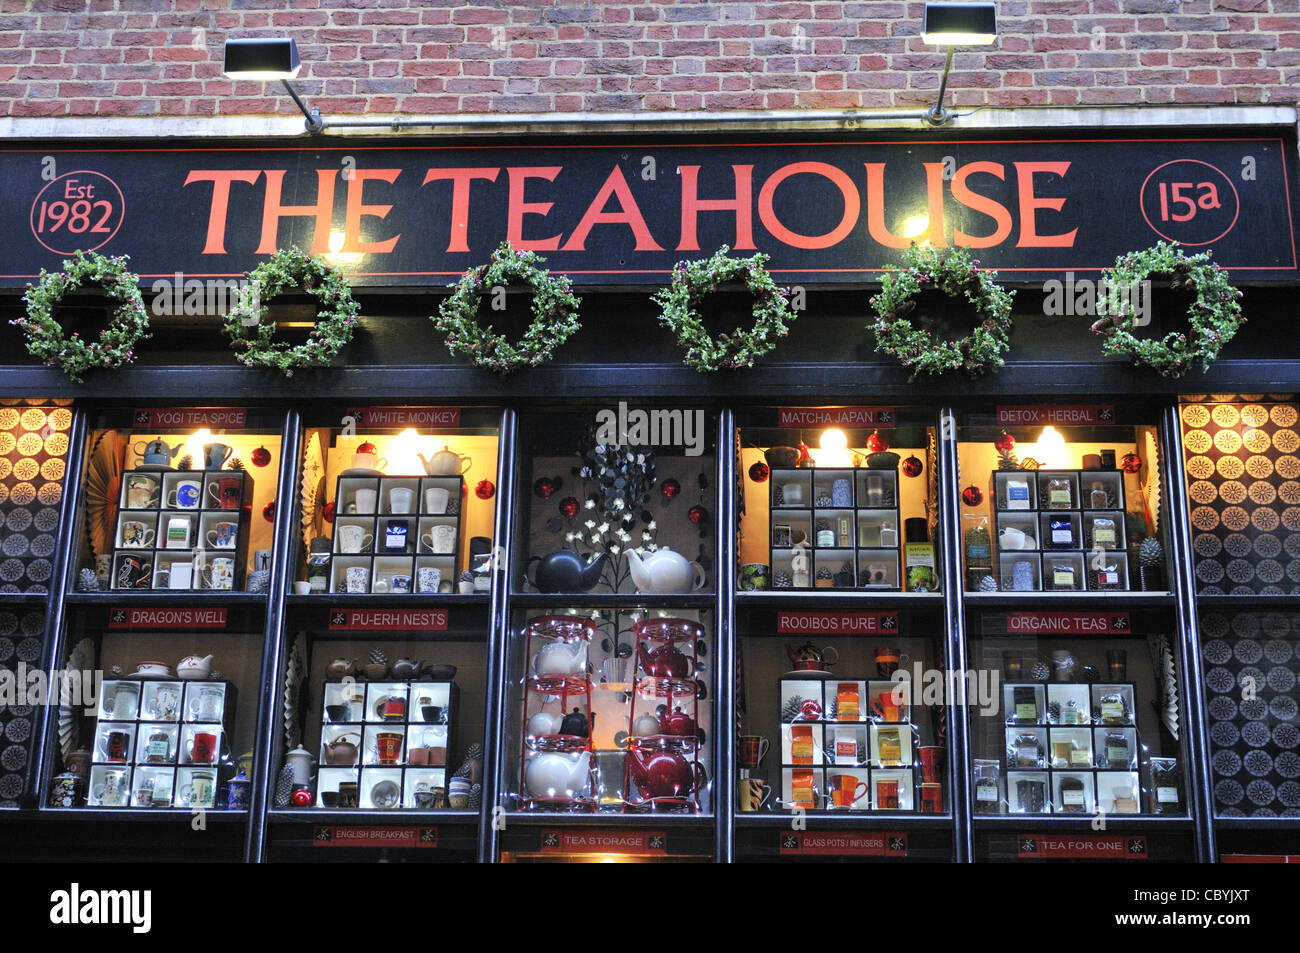 The Tea House, Covent Garden, London Stock Photo - Alamy